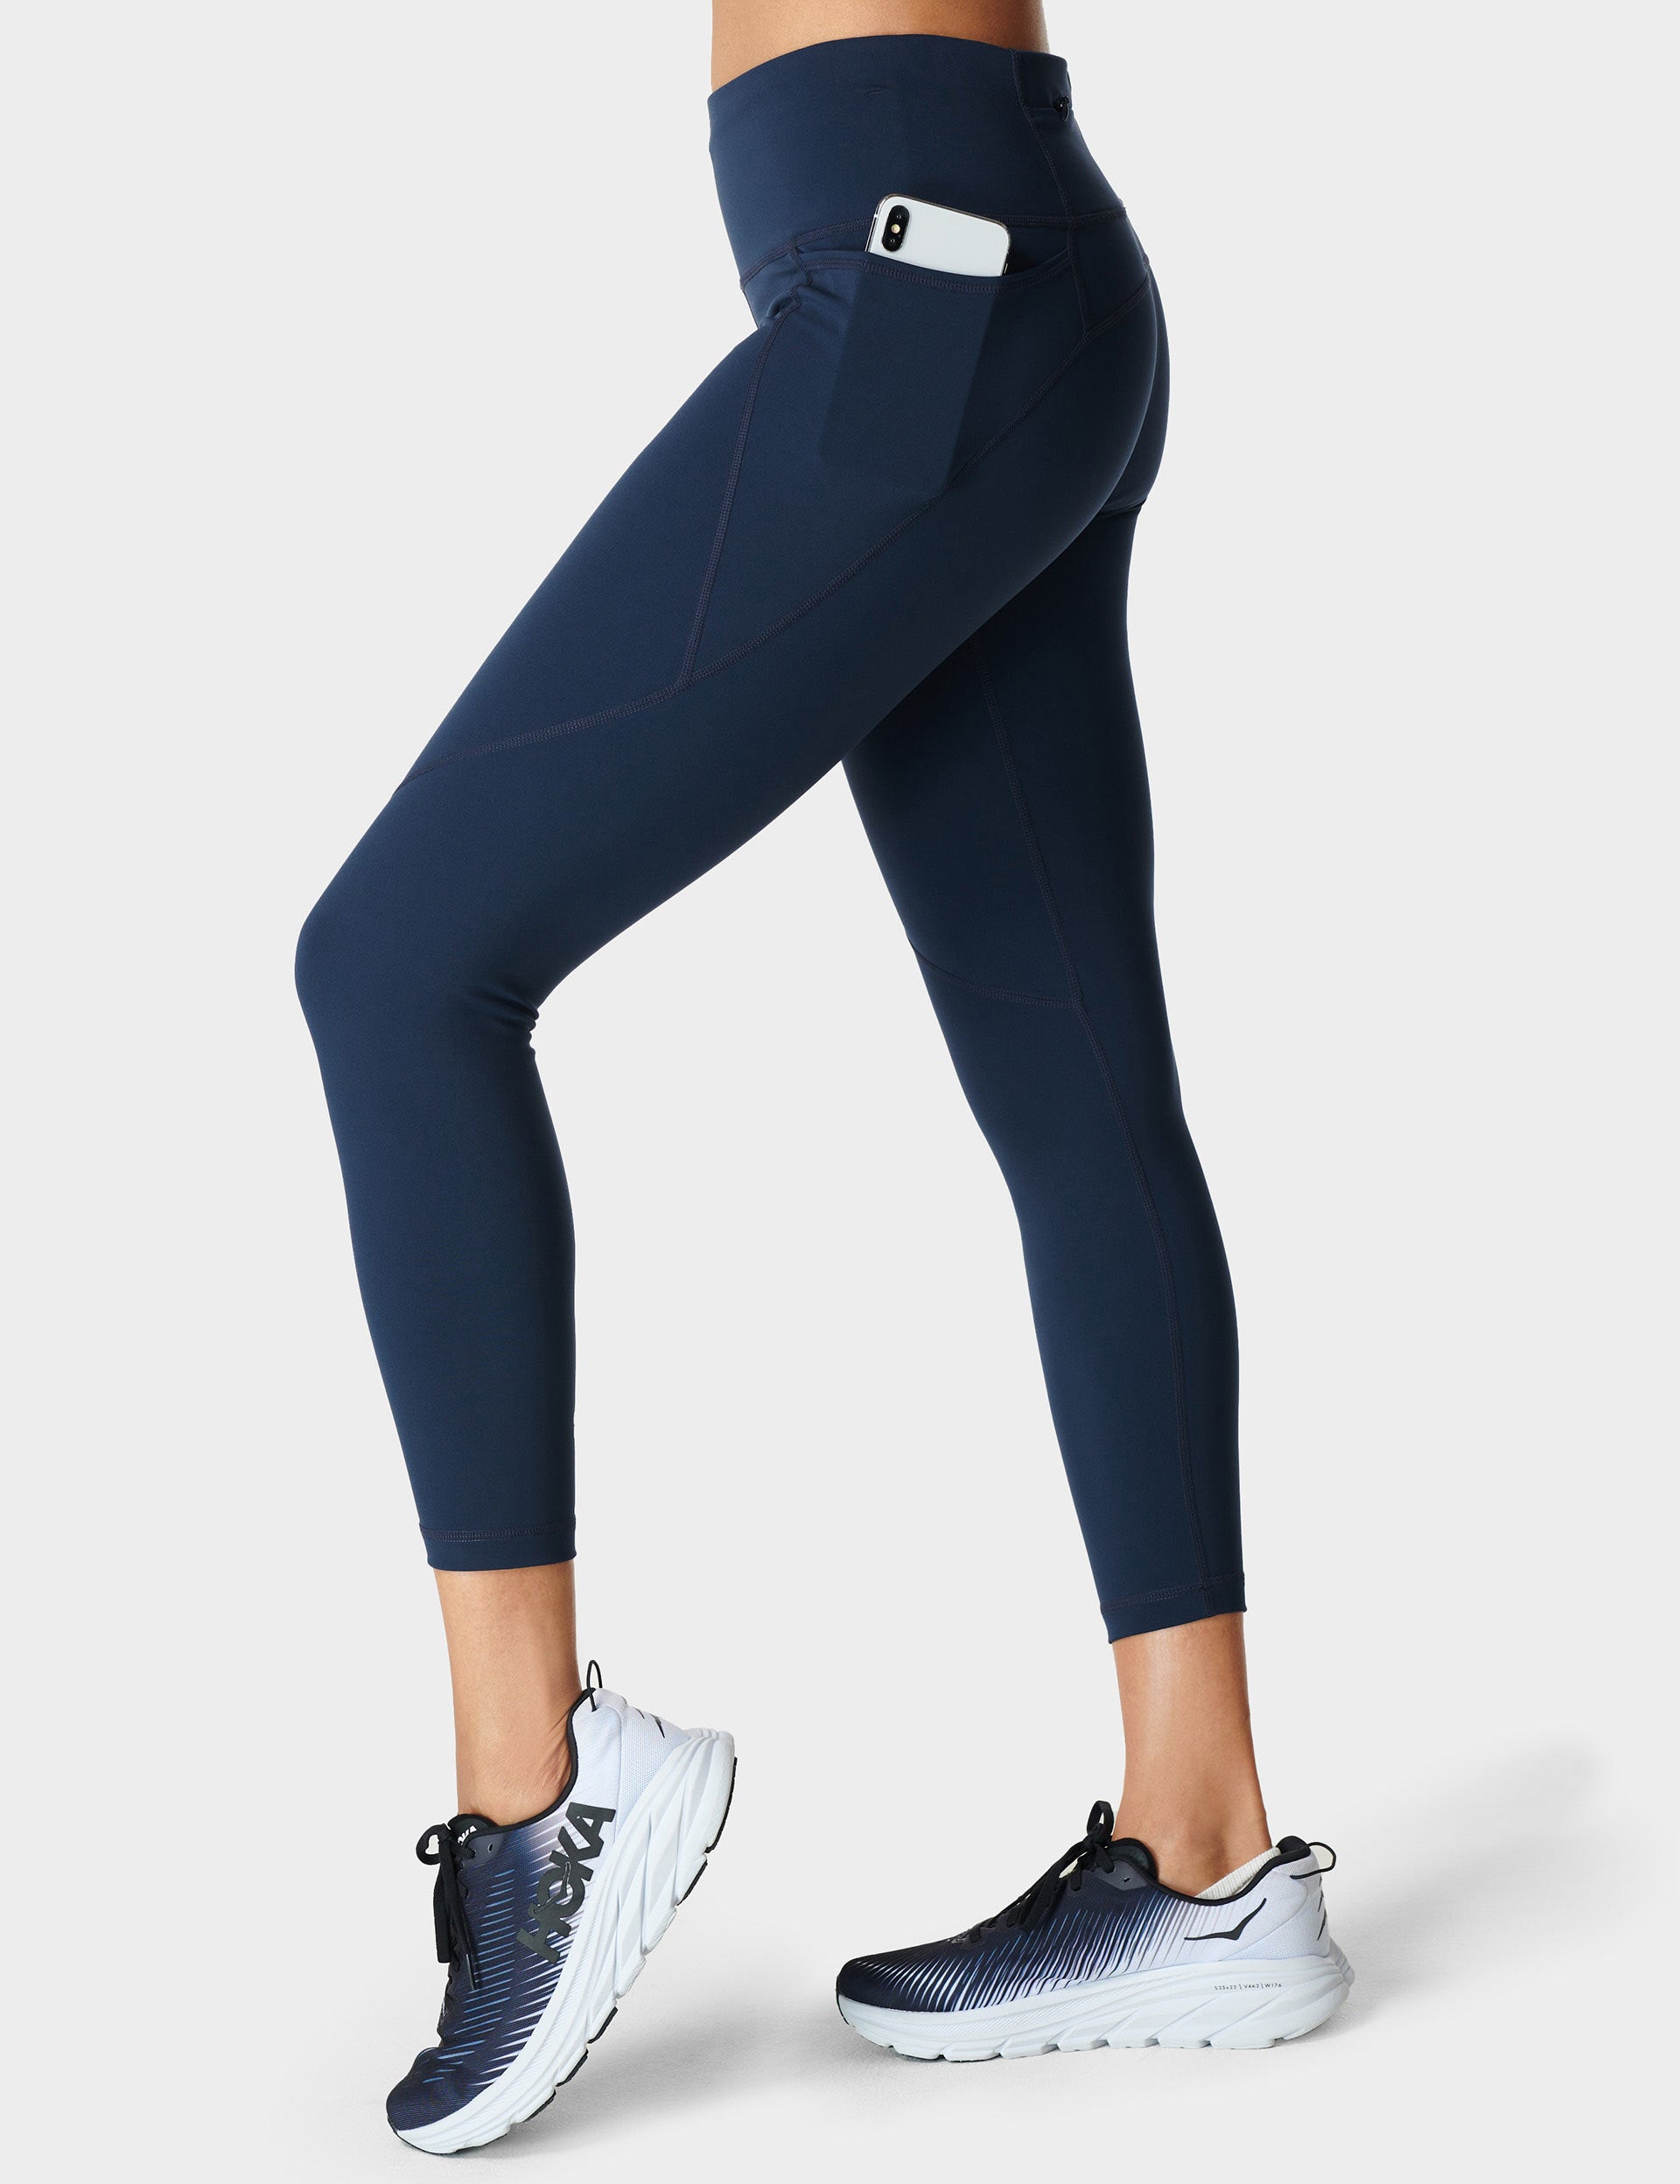 Buy Vendure Sports Women's Power Boot Cut Yoga Pant - Navy Blue